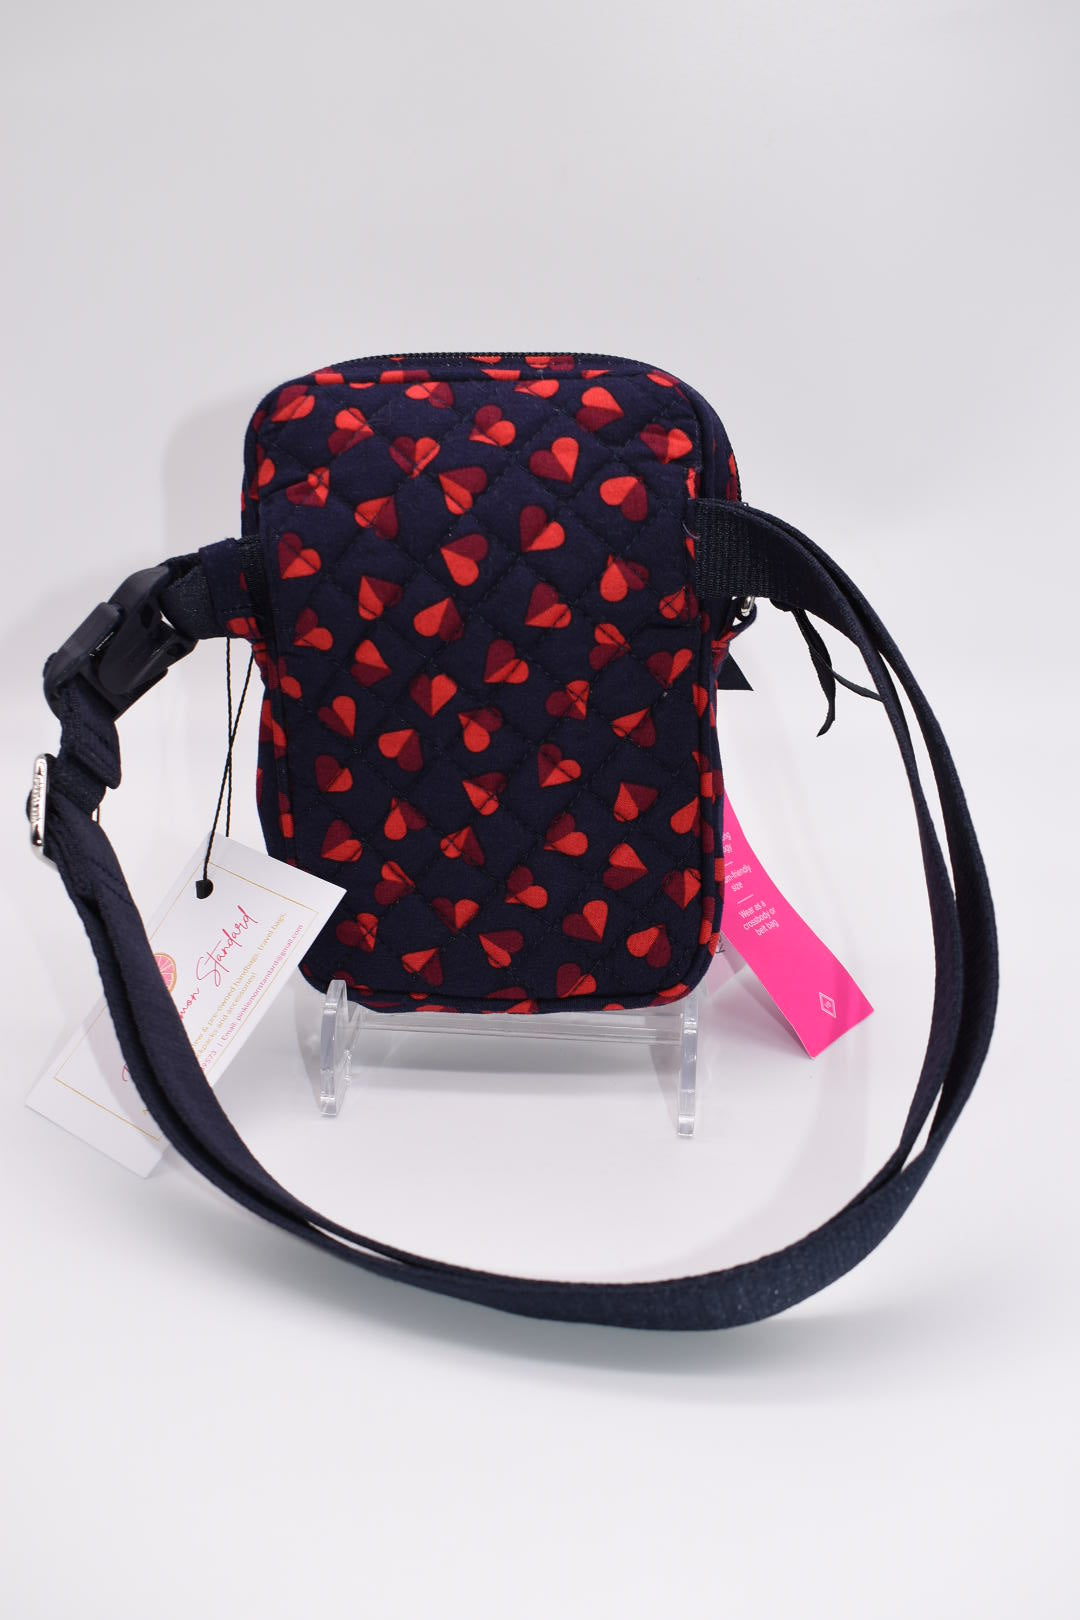 Vera Bradley RFID Convertible Crossbody Bag in Sweet Hearts